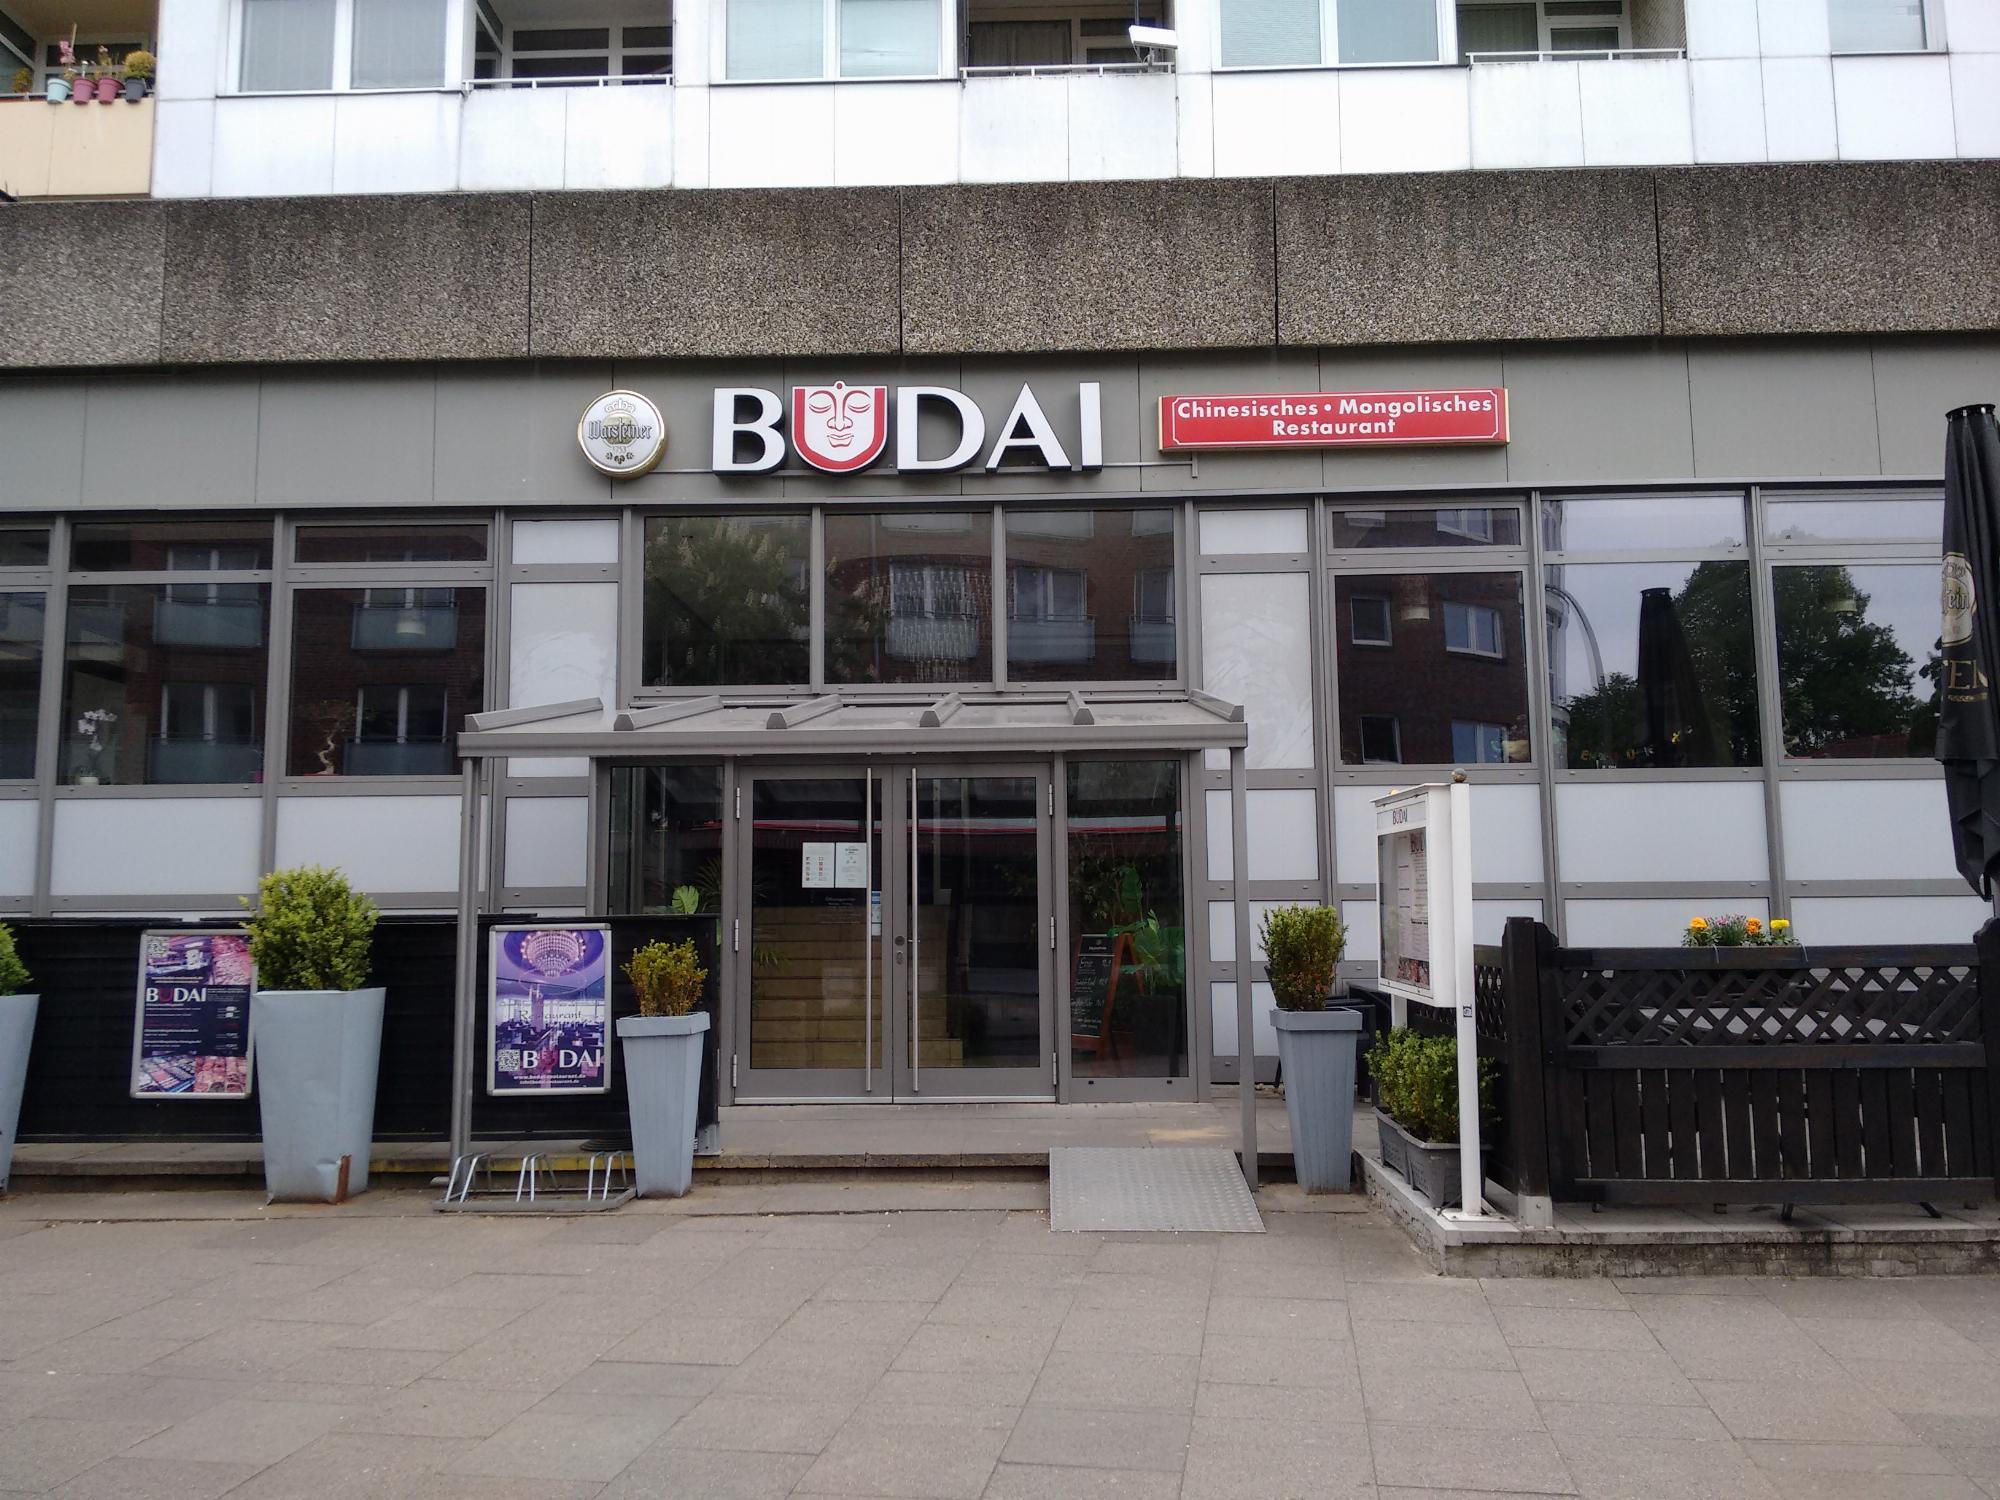 Restaurant Budai